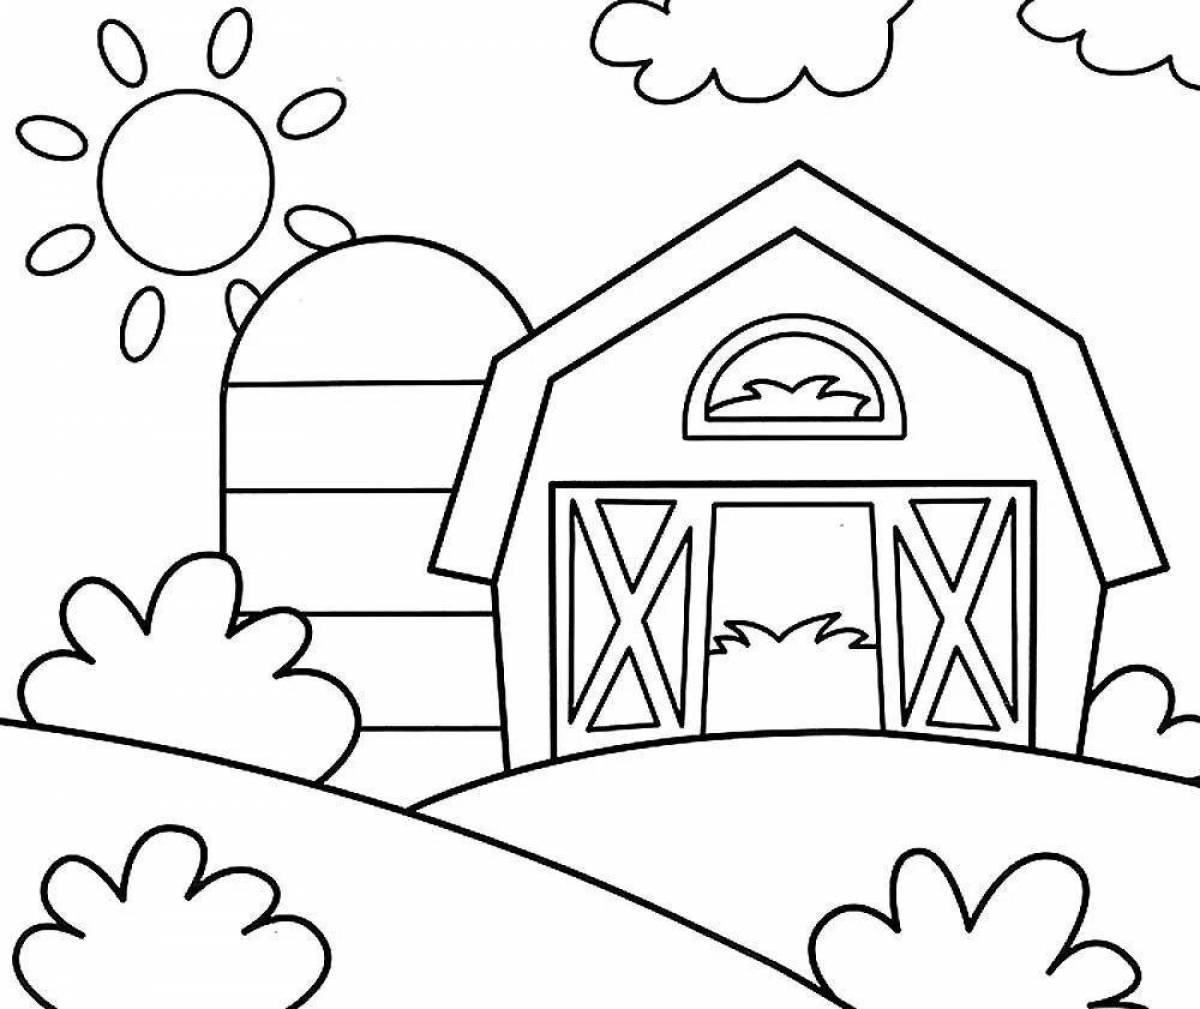 Farm fun coloring book for kids